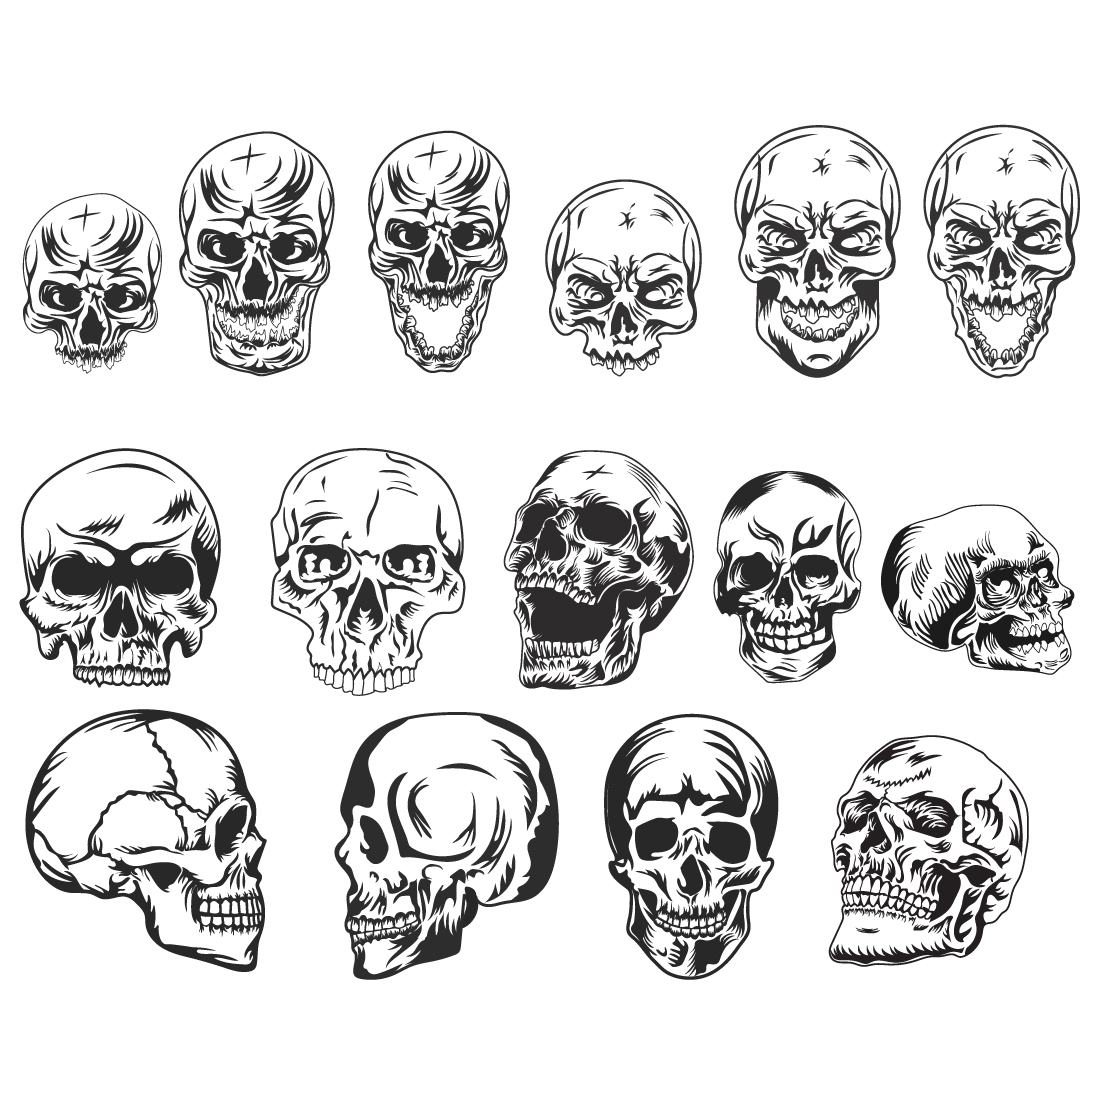 Human skull vector illustration preview image.